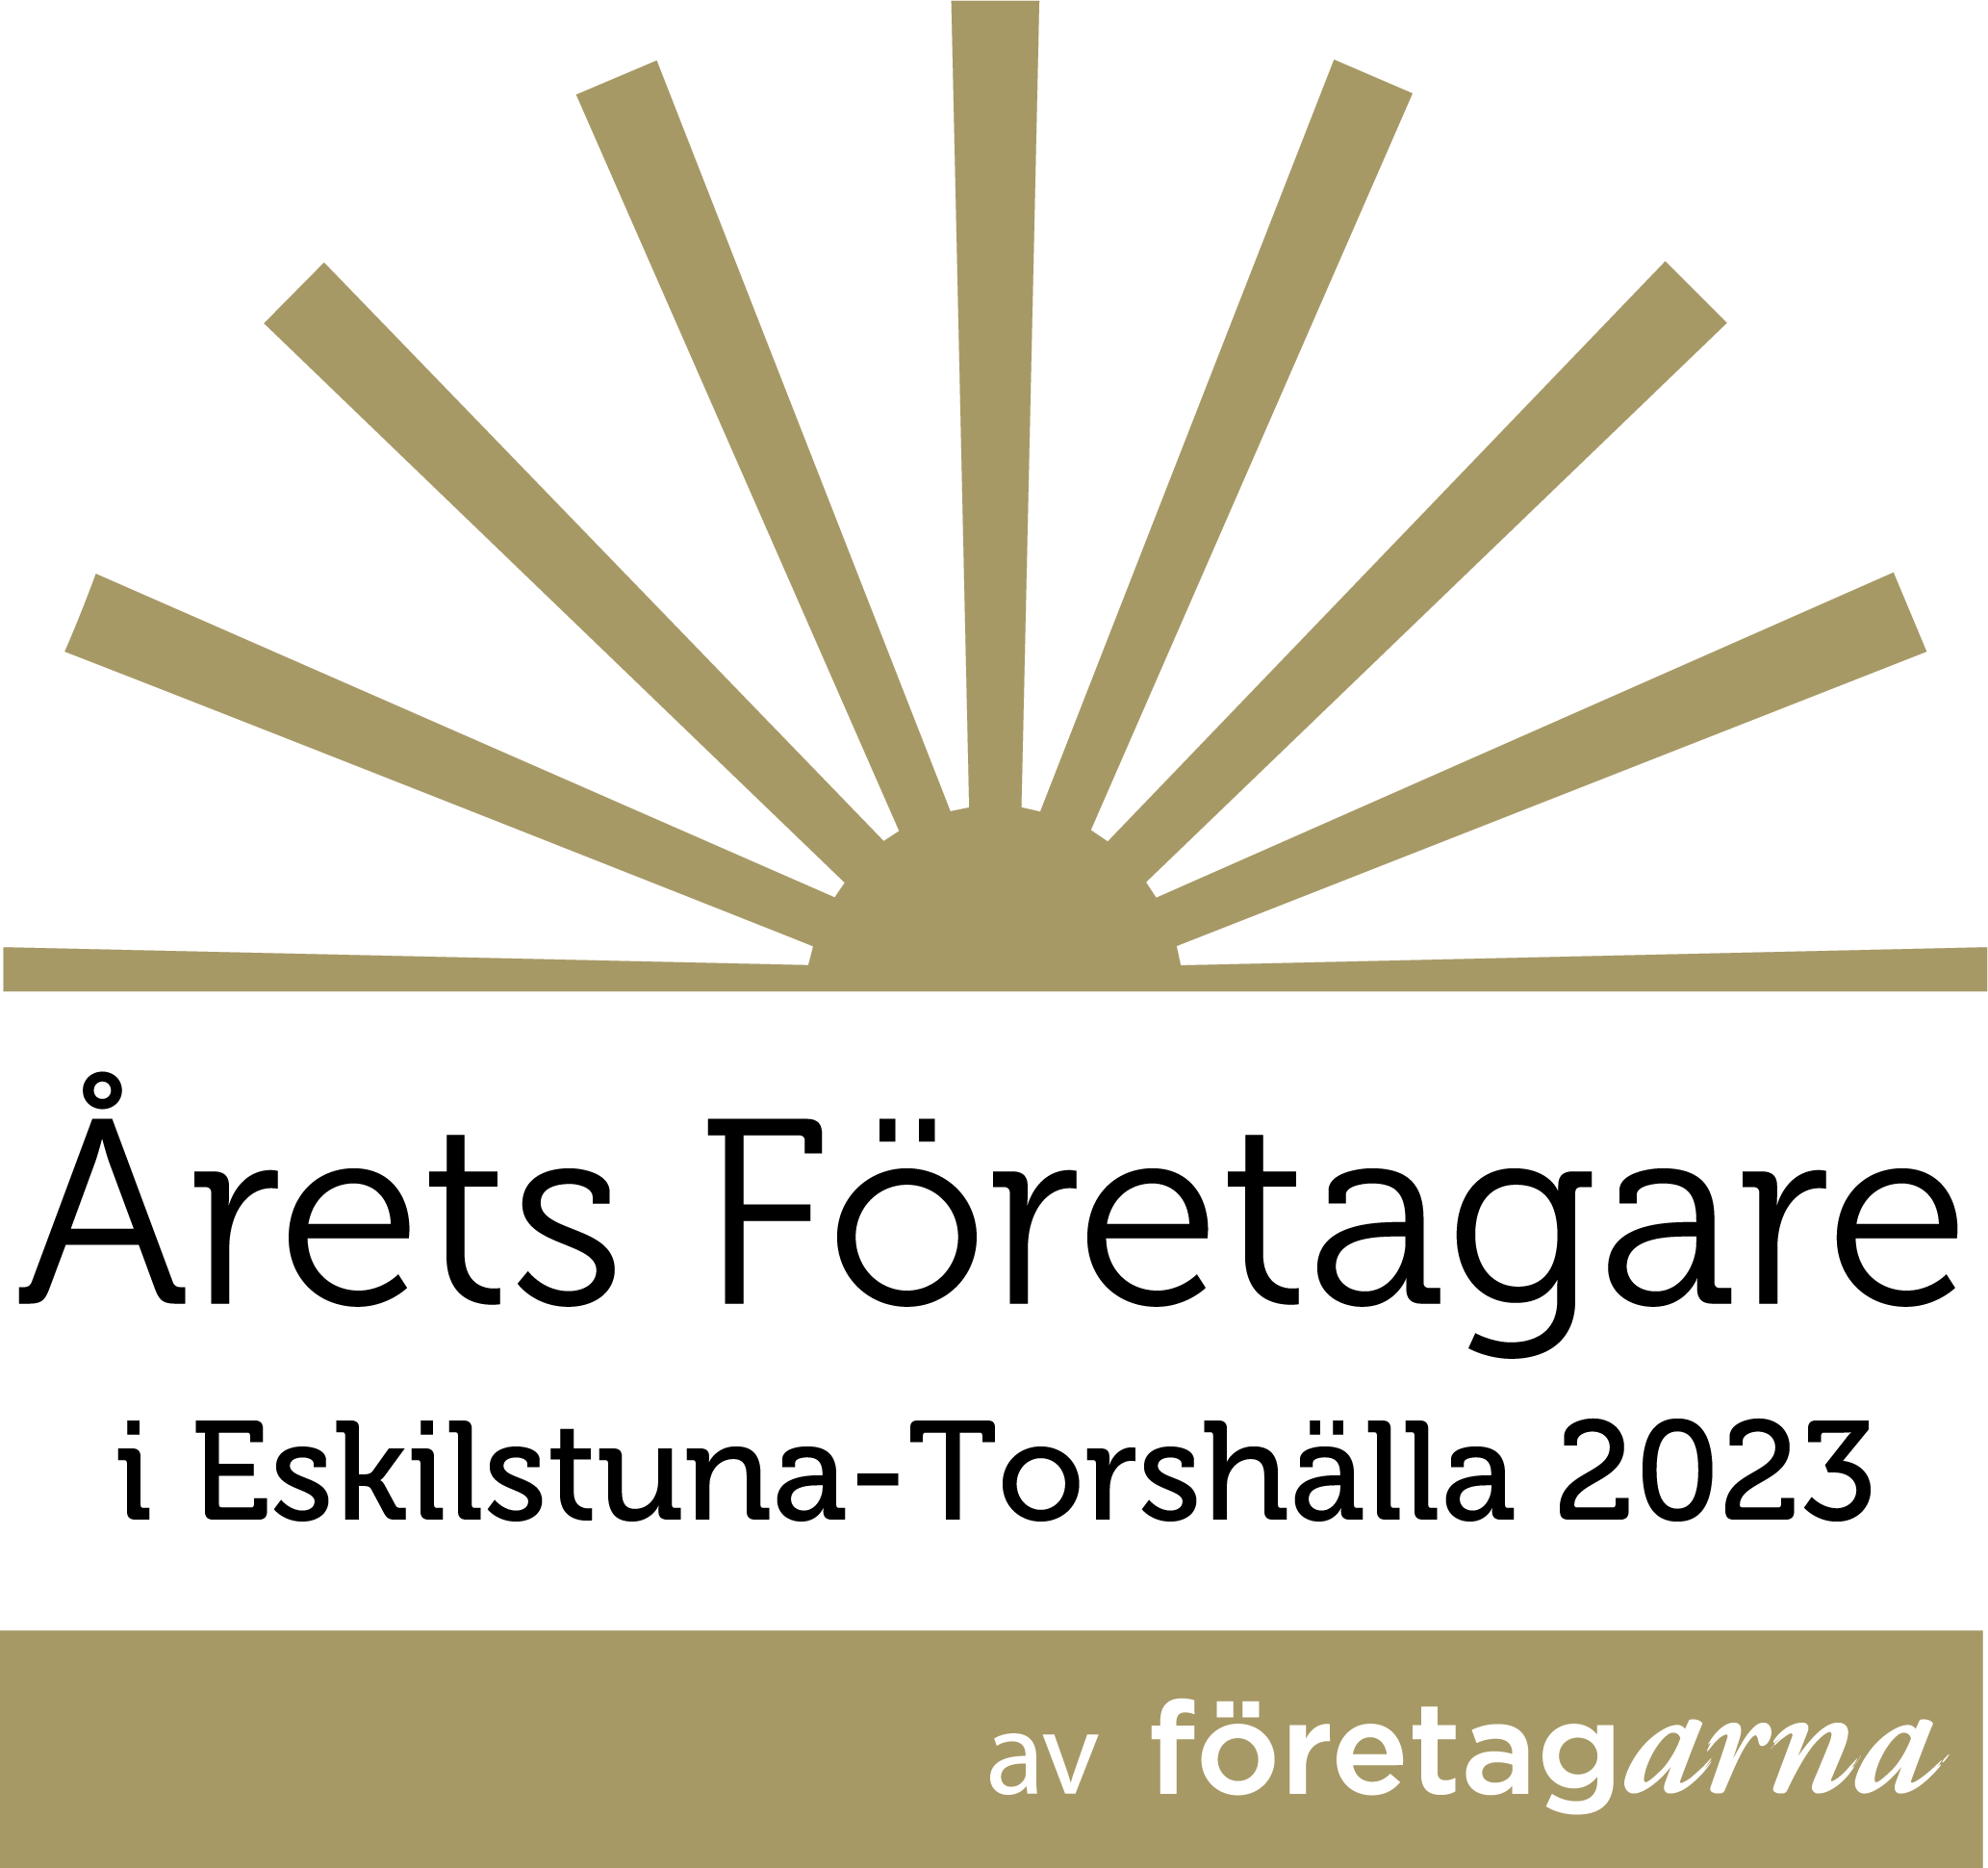 rets Fretagare 2023 Eskilstuna-Torshlla